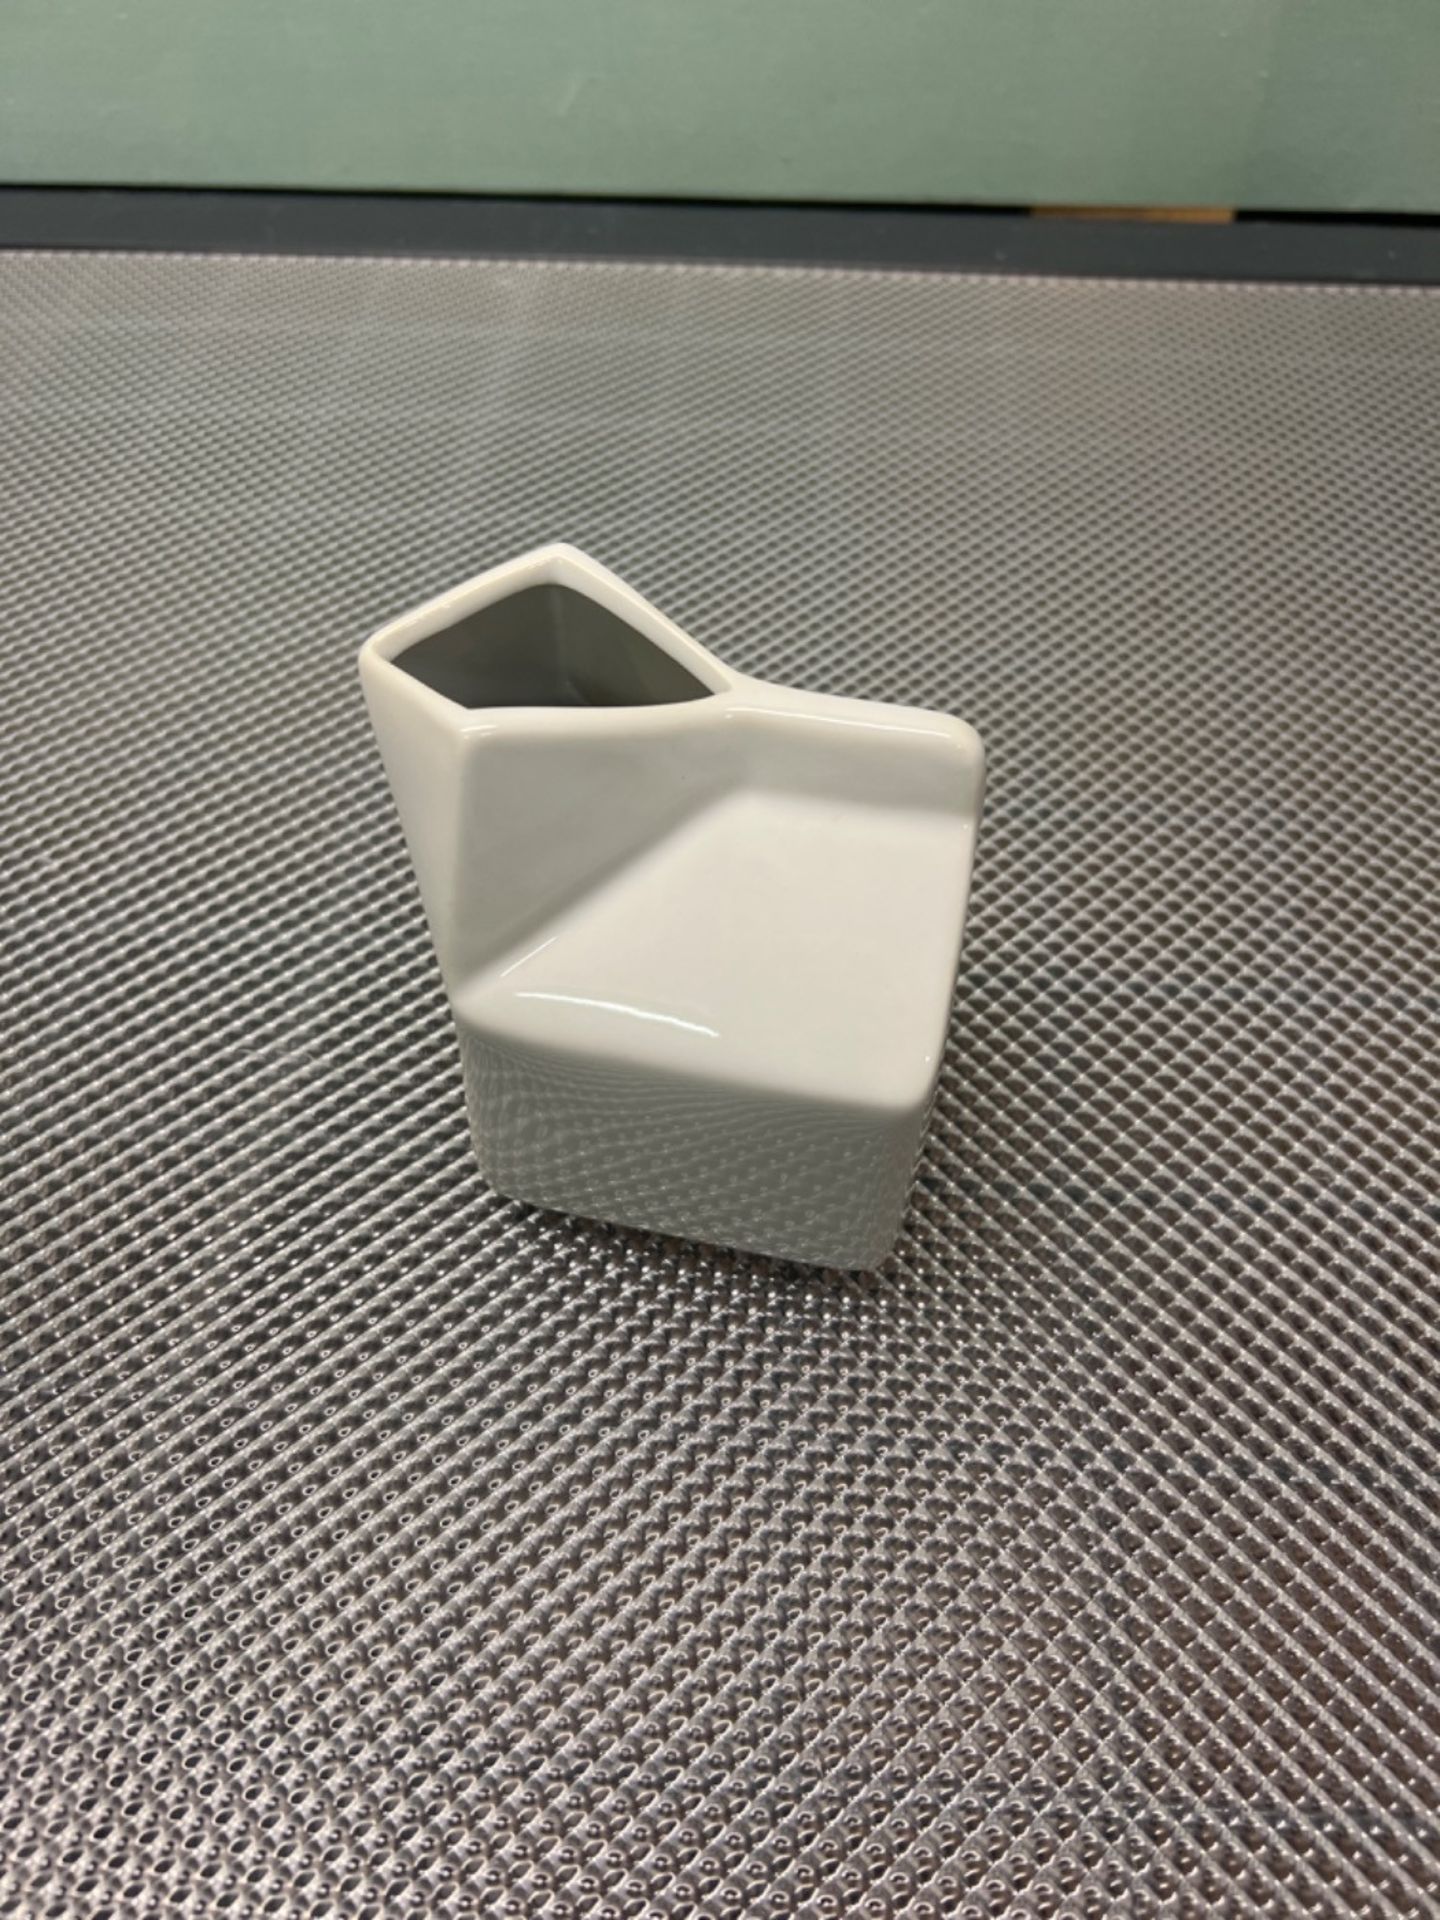 Ceramic Milk Carton 10.5oz / 300ml - Novelty Hot Beverage Service White Jug - Image 3 of 3